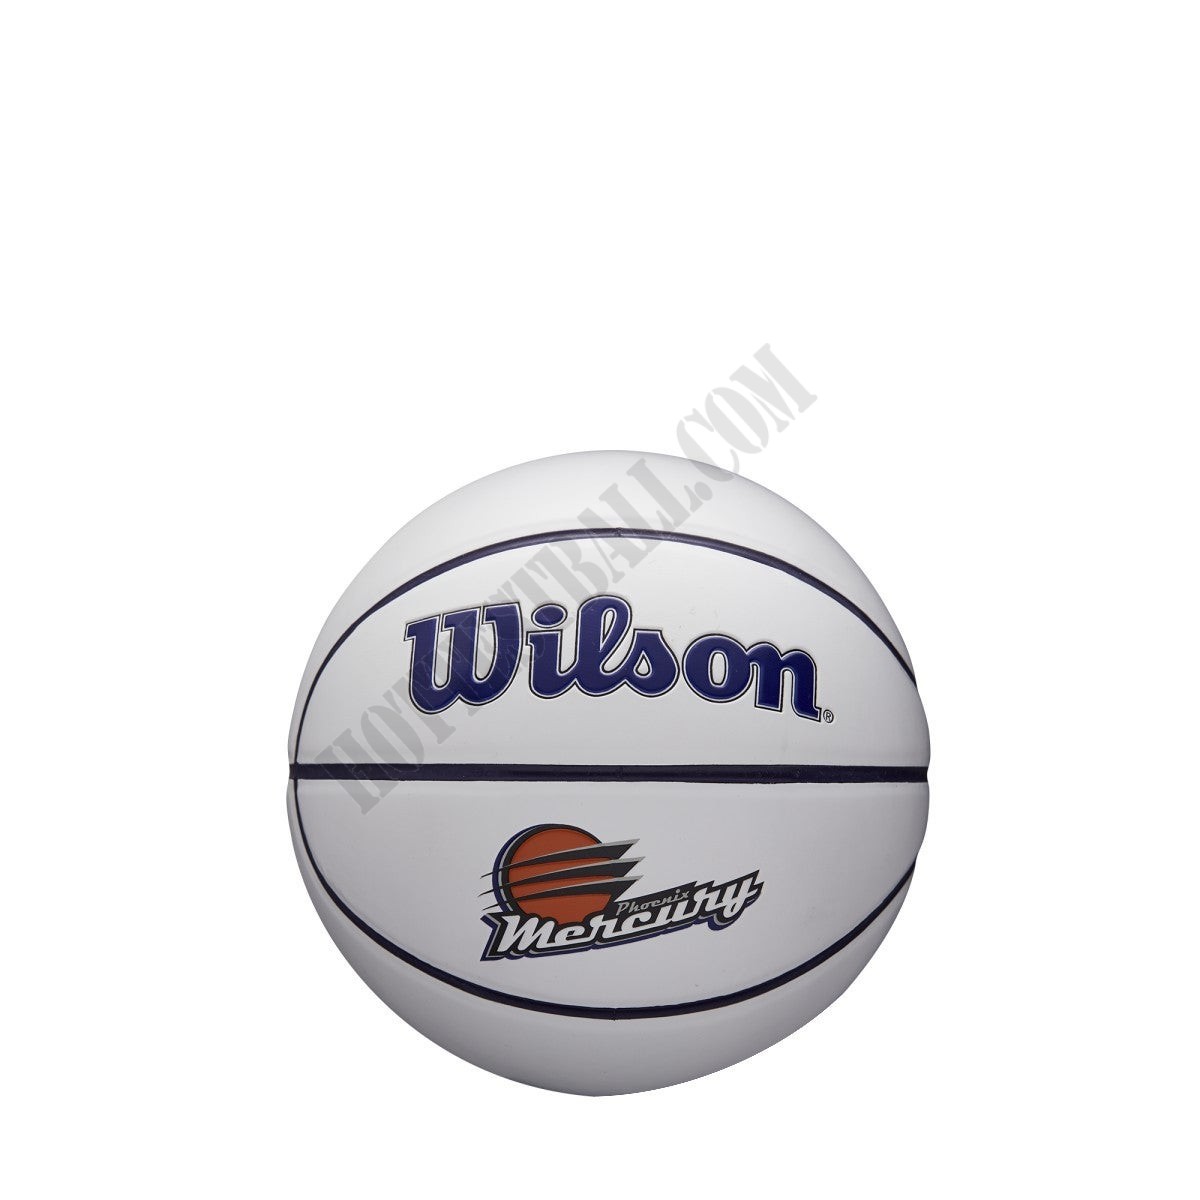 WNBA Team Mini Autograph Basketball - Phoenix Mercury - Wilson Discount Store - WNBA Team Mini Autograph Basketball - Phoenix Mercury - Wilson Discount Store